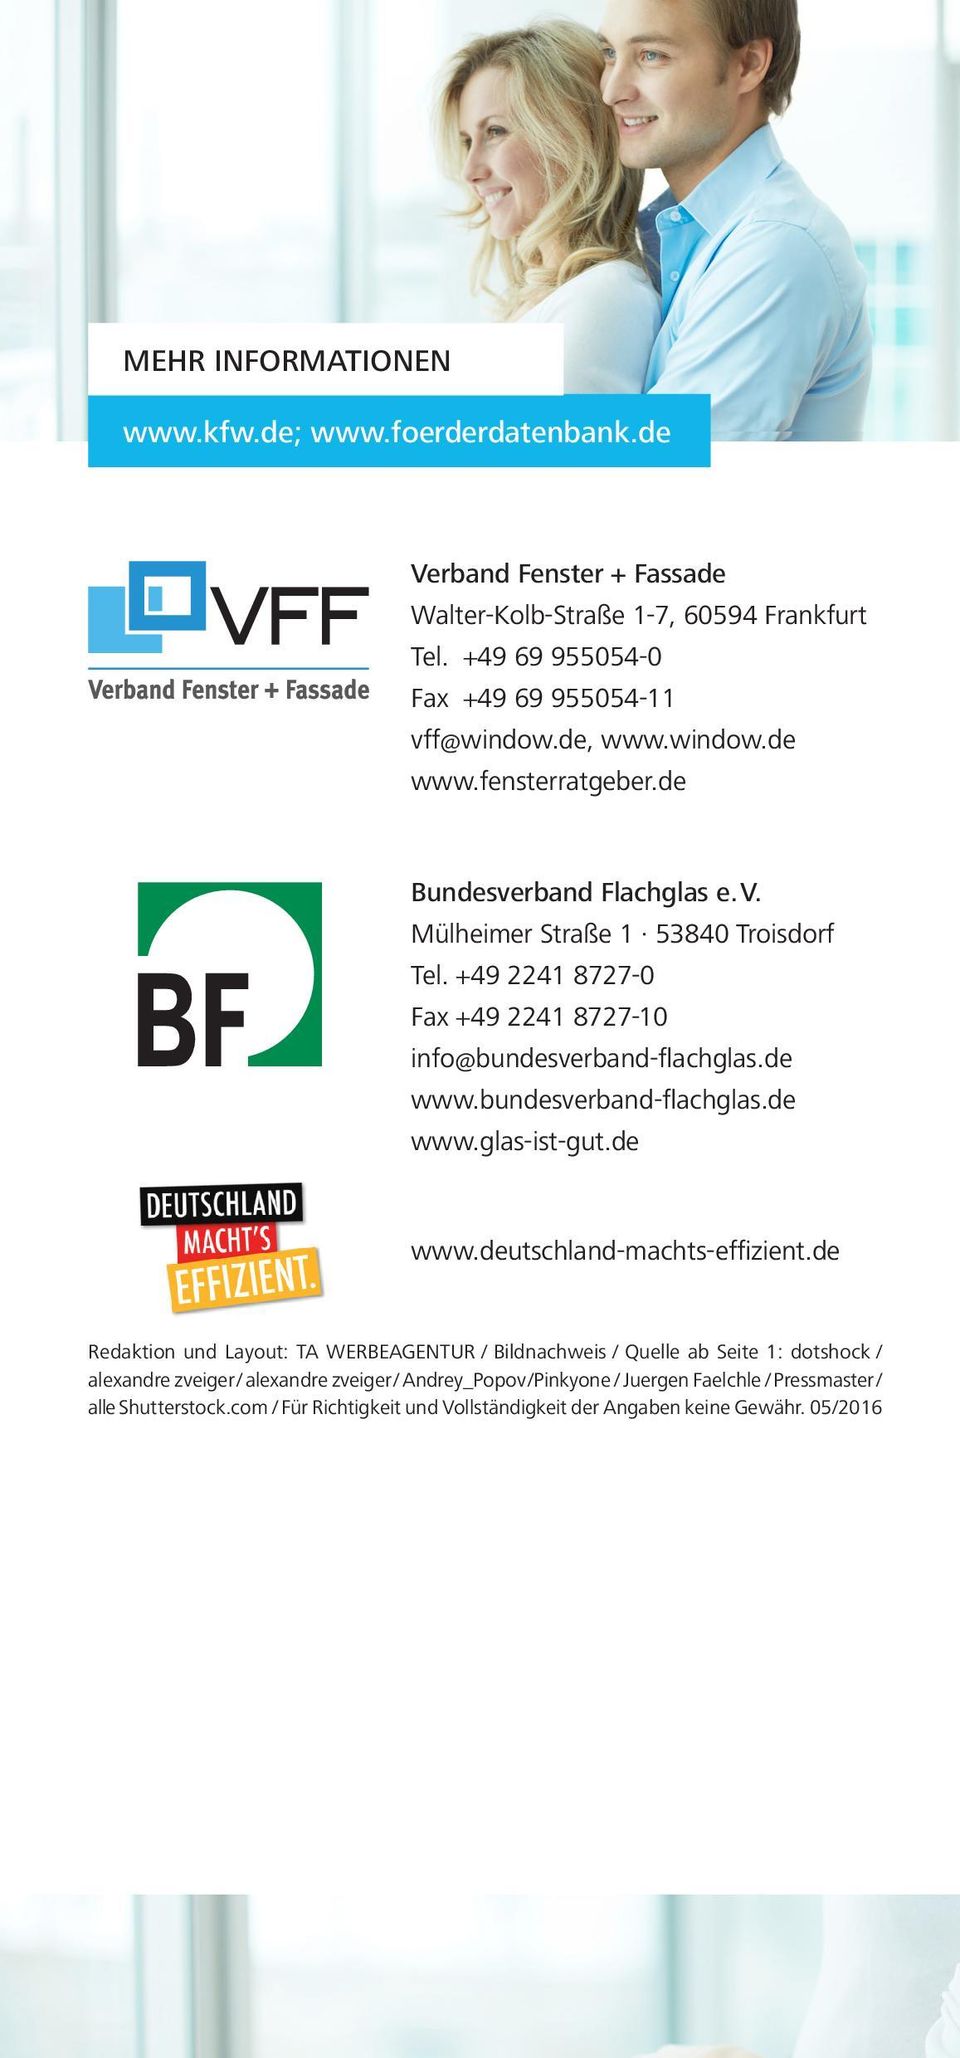 de www.bundesverband-flachglas.de www.glas-ist-gut.de www.deutschland-machts-effizient.